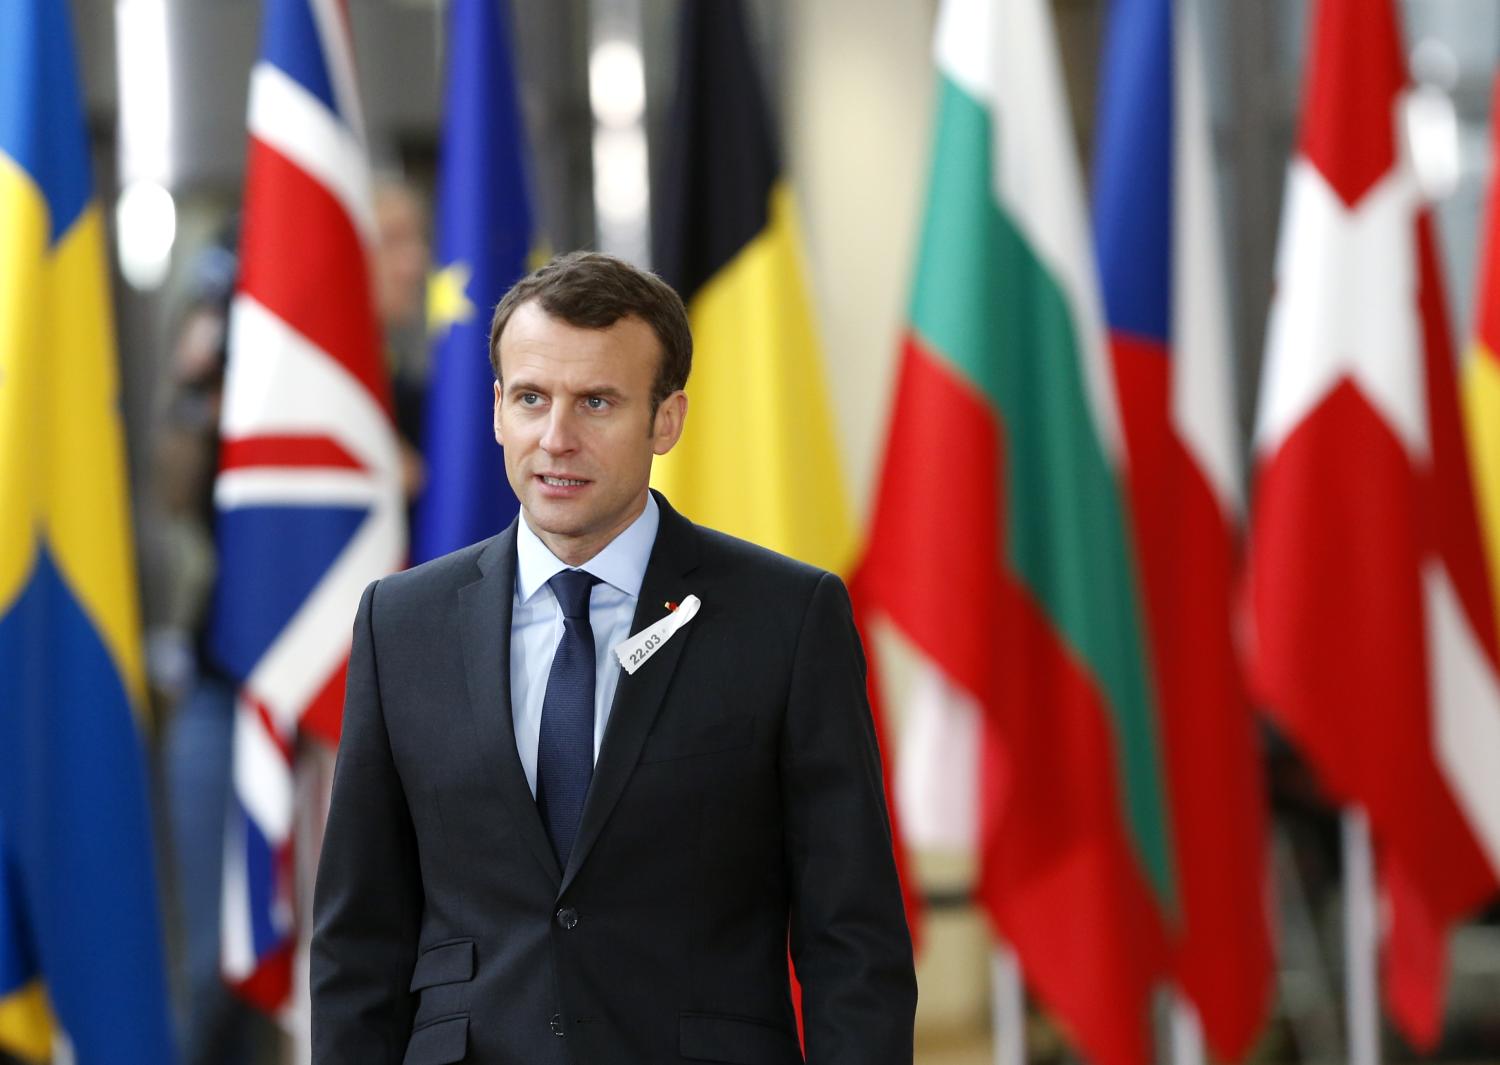 France's President Emmanuel Macron arrives at a European Union leaders summit in Brussels, Belgium, March 22, 2018. REUTERS/Francois Lenoir - UP1EE3M13213M